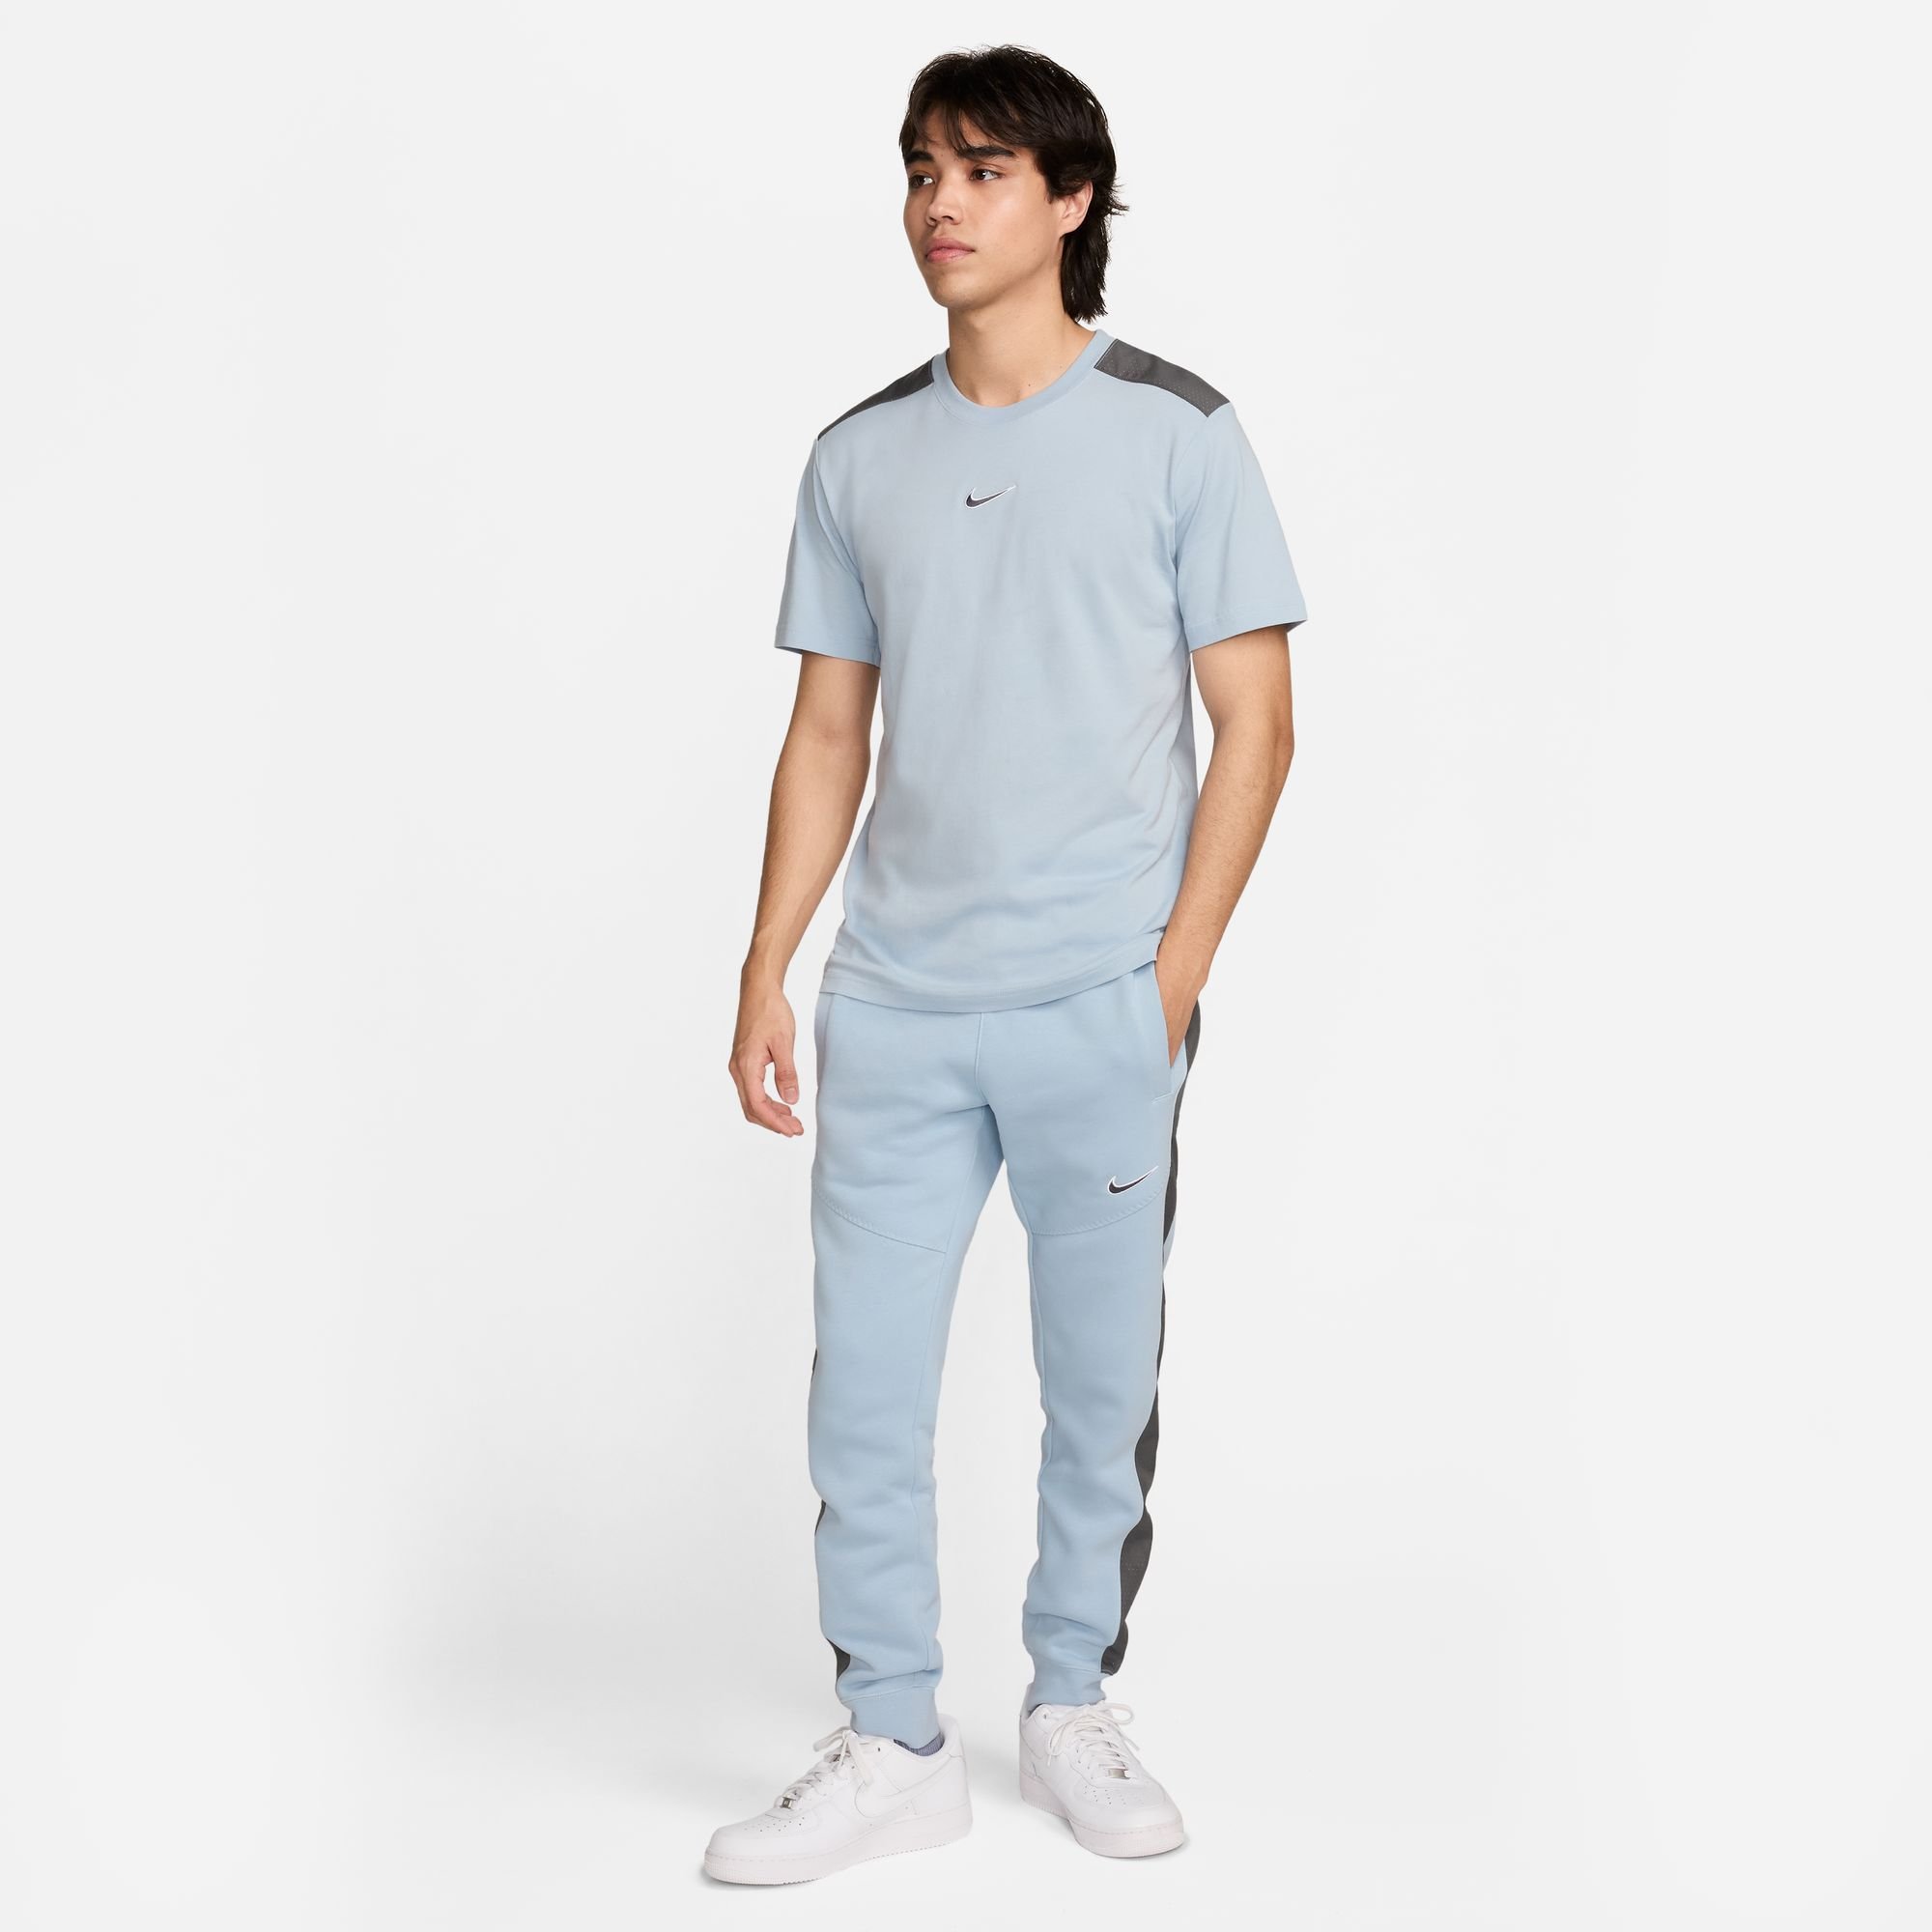 Nike Graphic T-Shirt Armory Blue Iron Grey